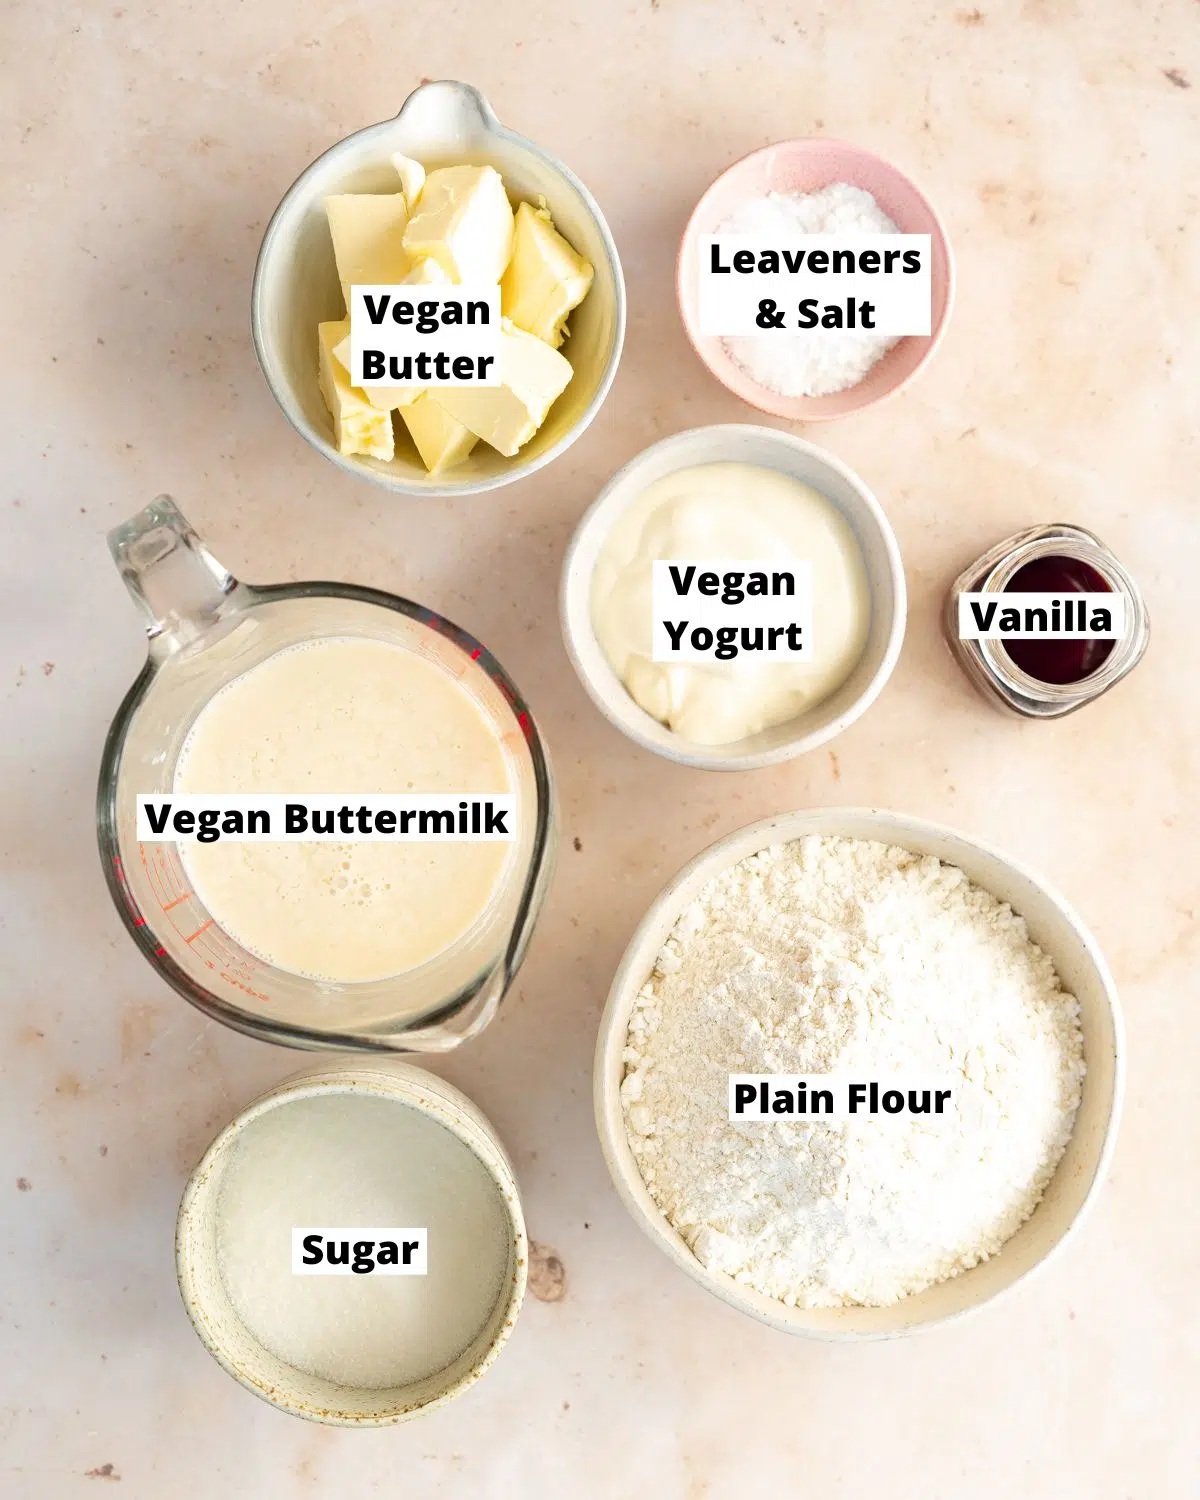 ingredients to make vegan cupcakes measured out in bowls.